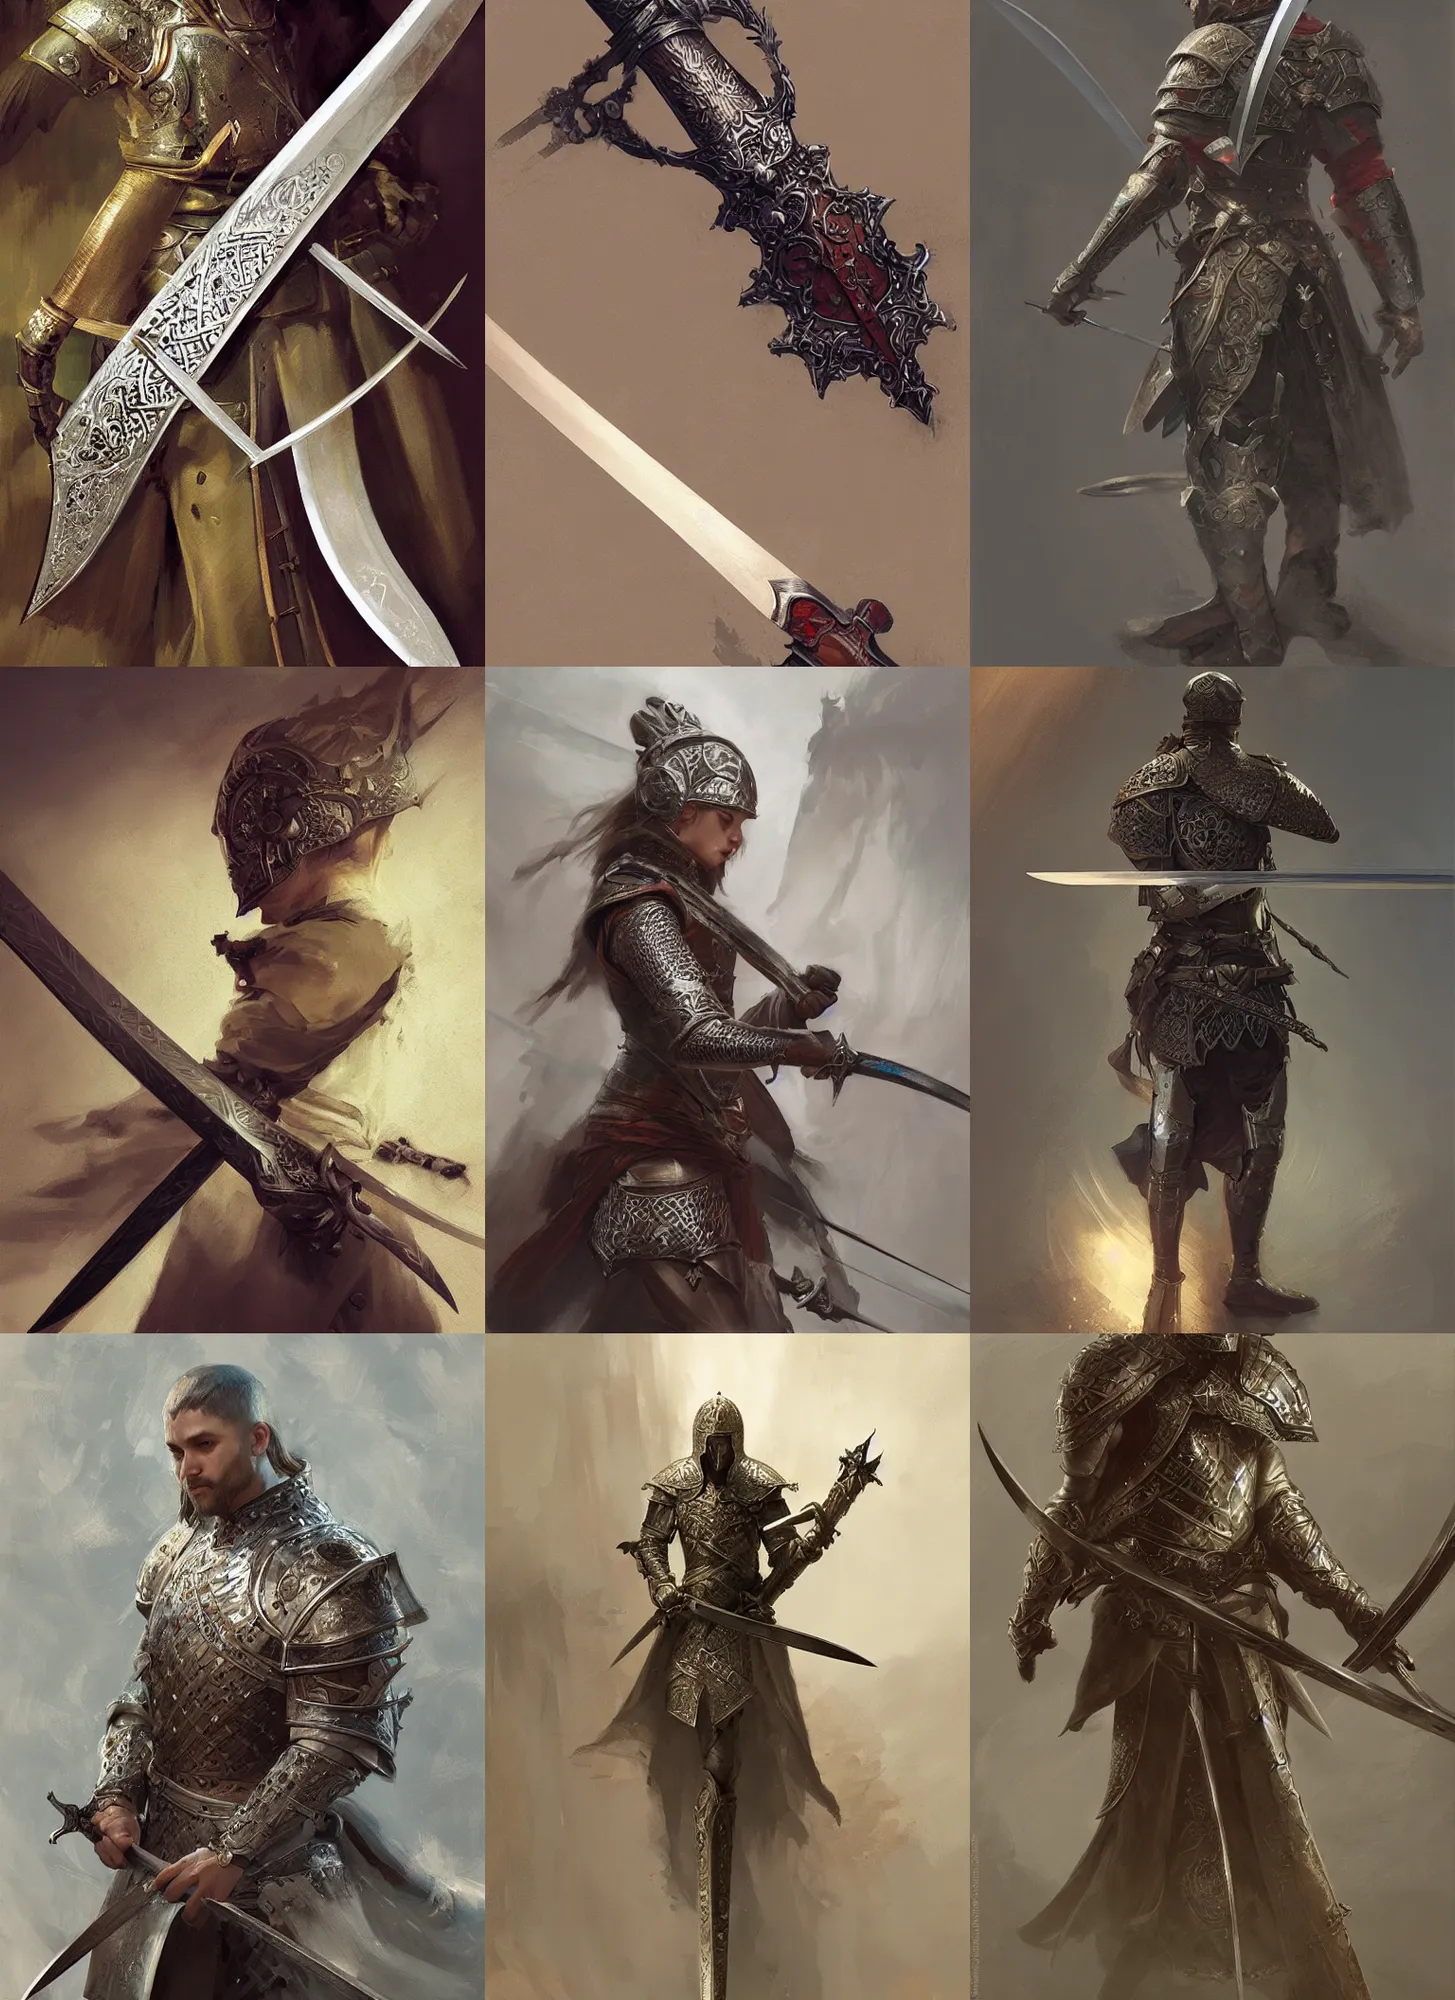 Prompt: medieval sword, intricate, highly detailed, smooth, artstation, digital illustration, ruan jia, mandy jurgens, rutkowski